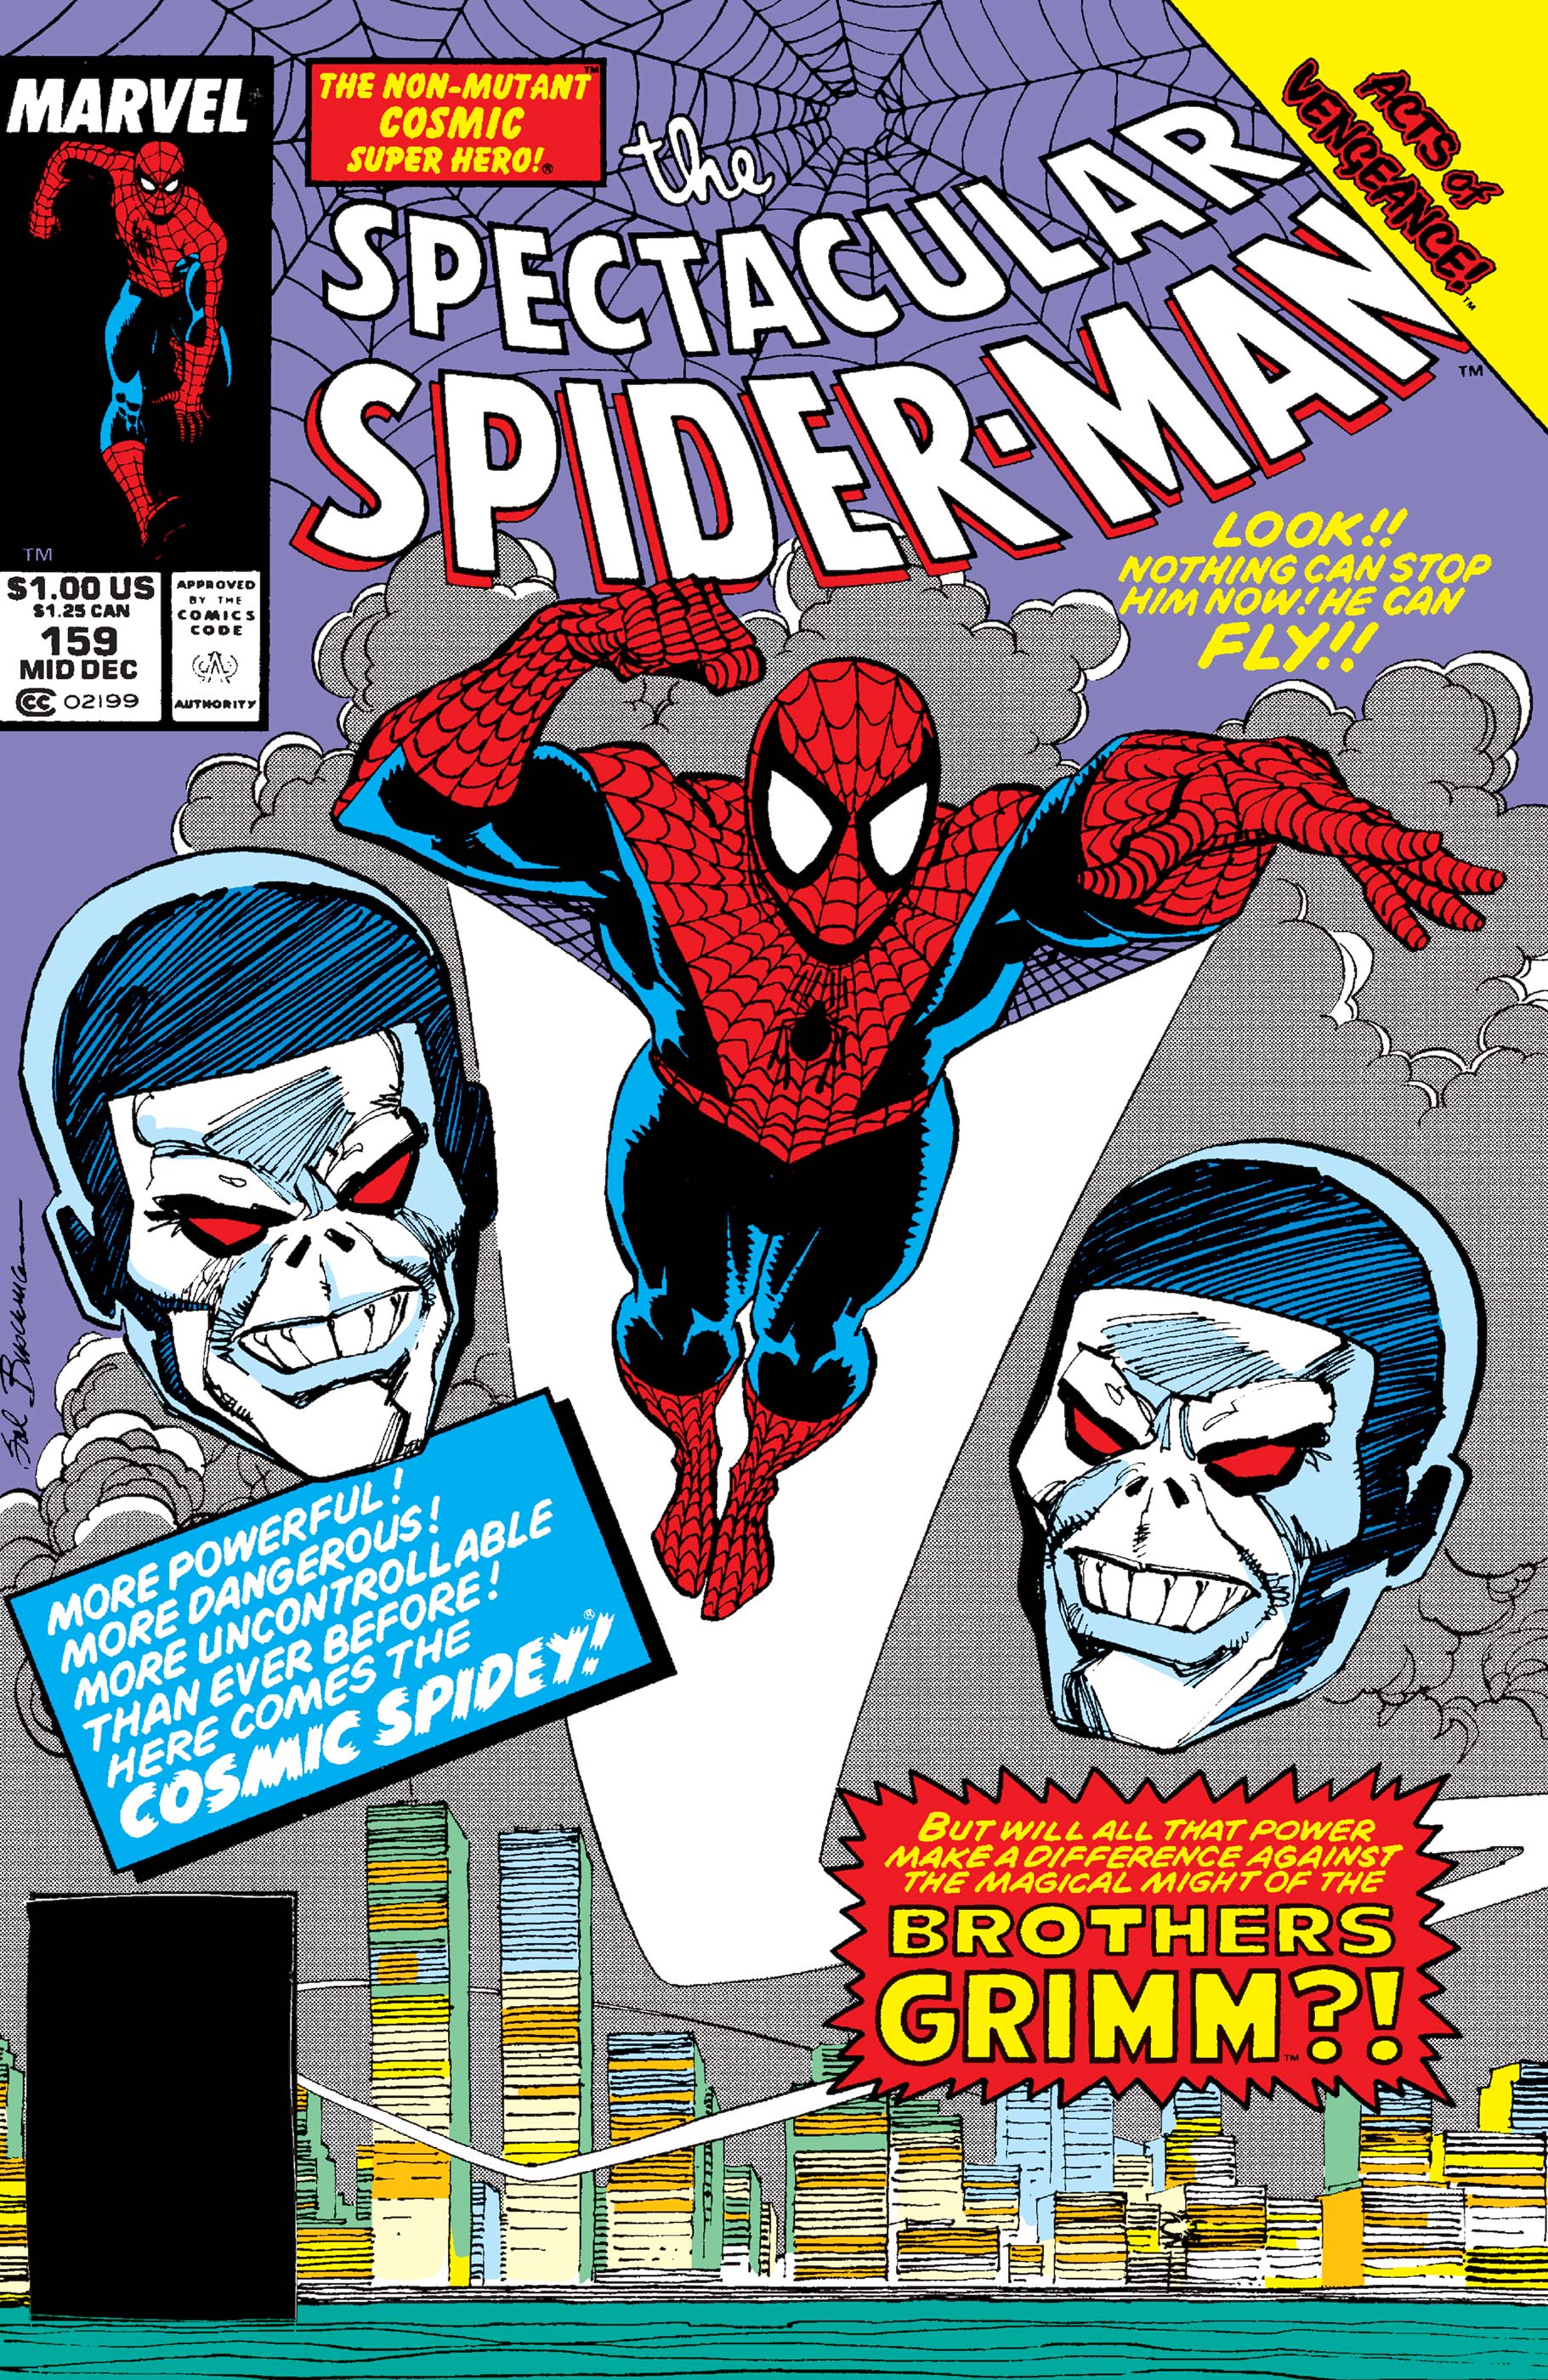 Peter Parker, the Spectacular Spider-Man (1976) #159